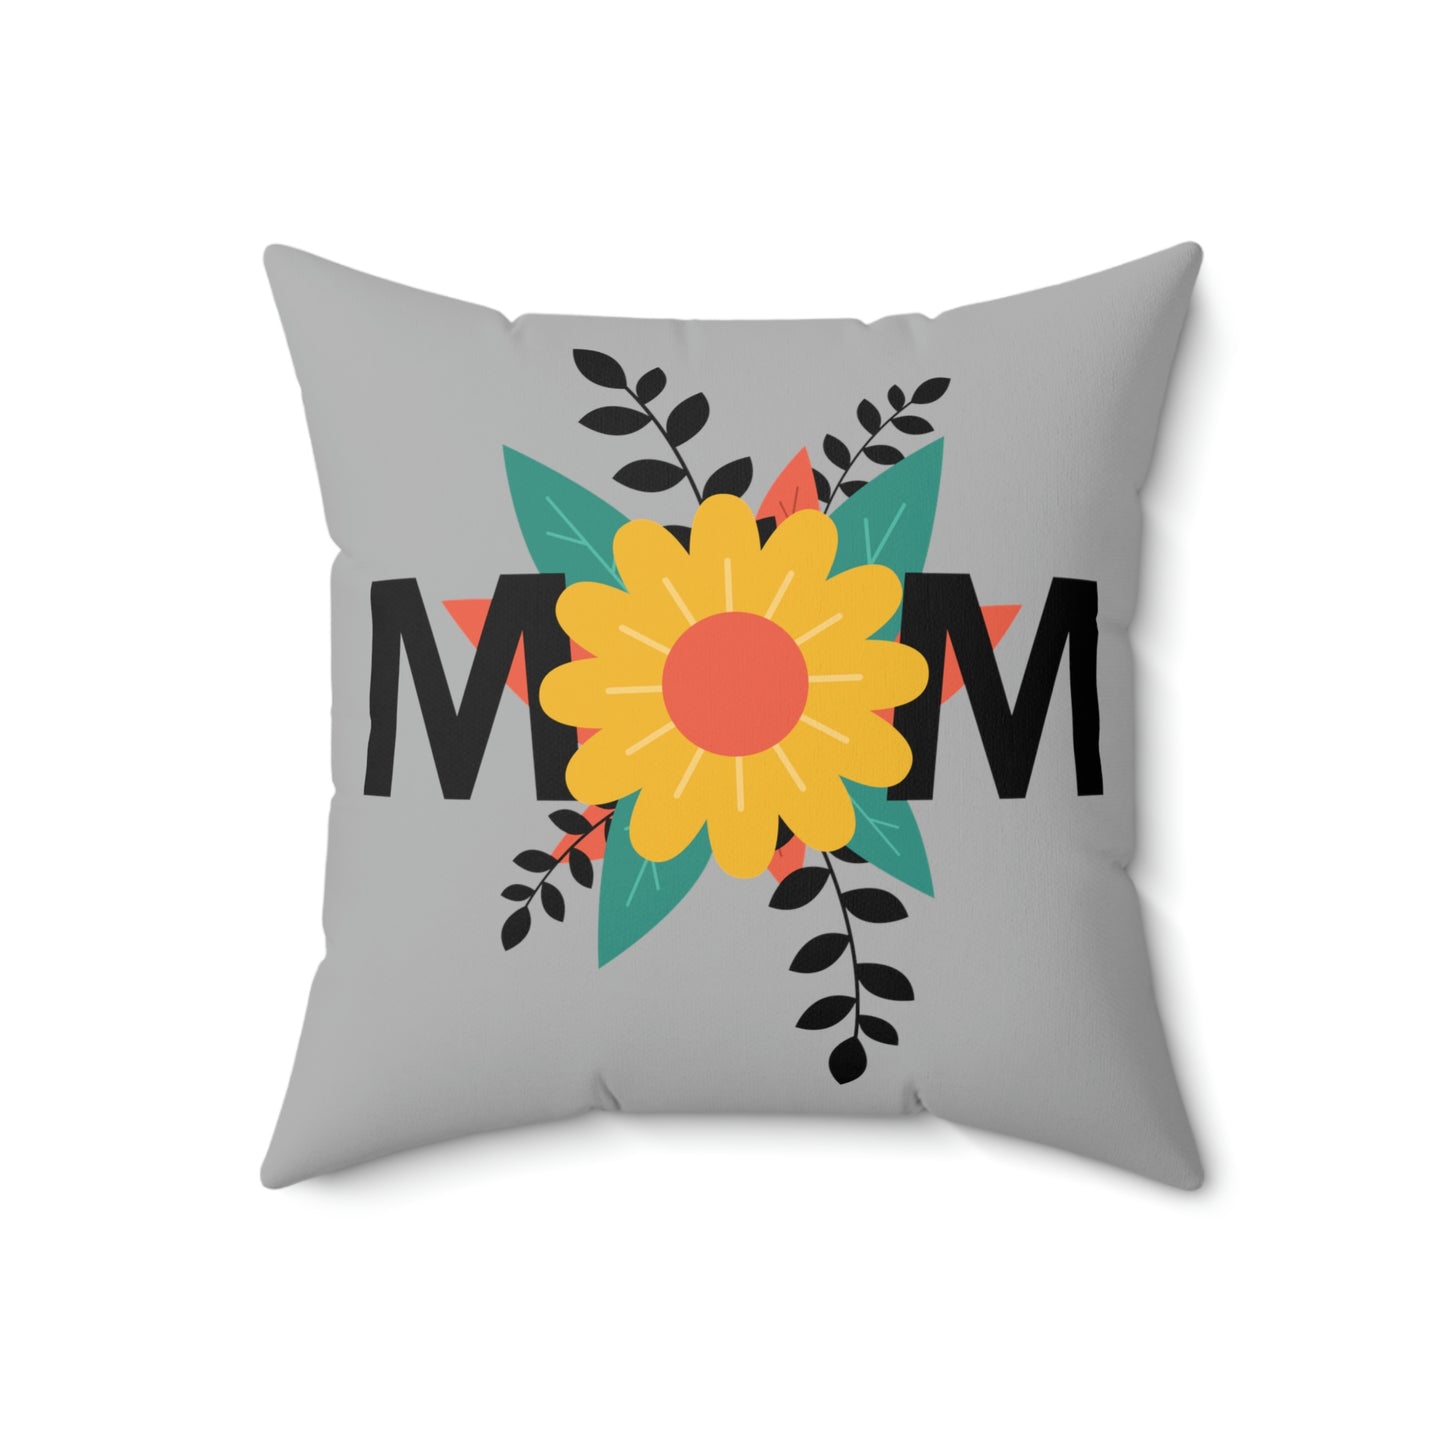 Spun Polyester Square Pillow Case "Mom Flowers on Light Gray”